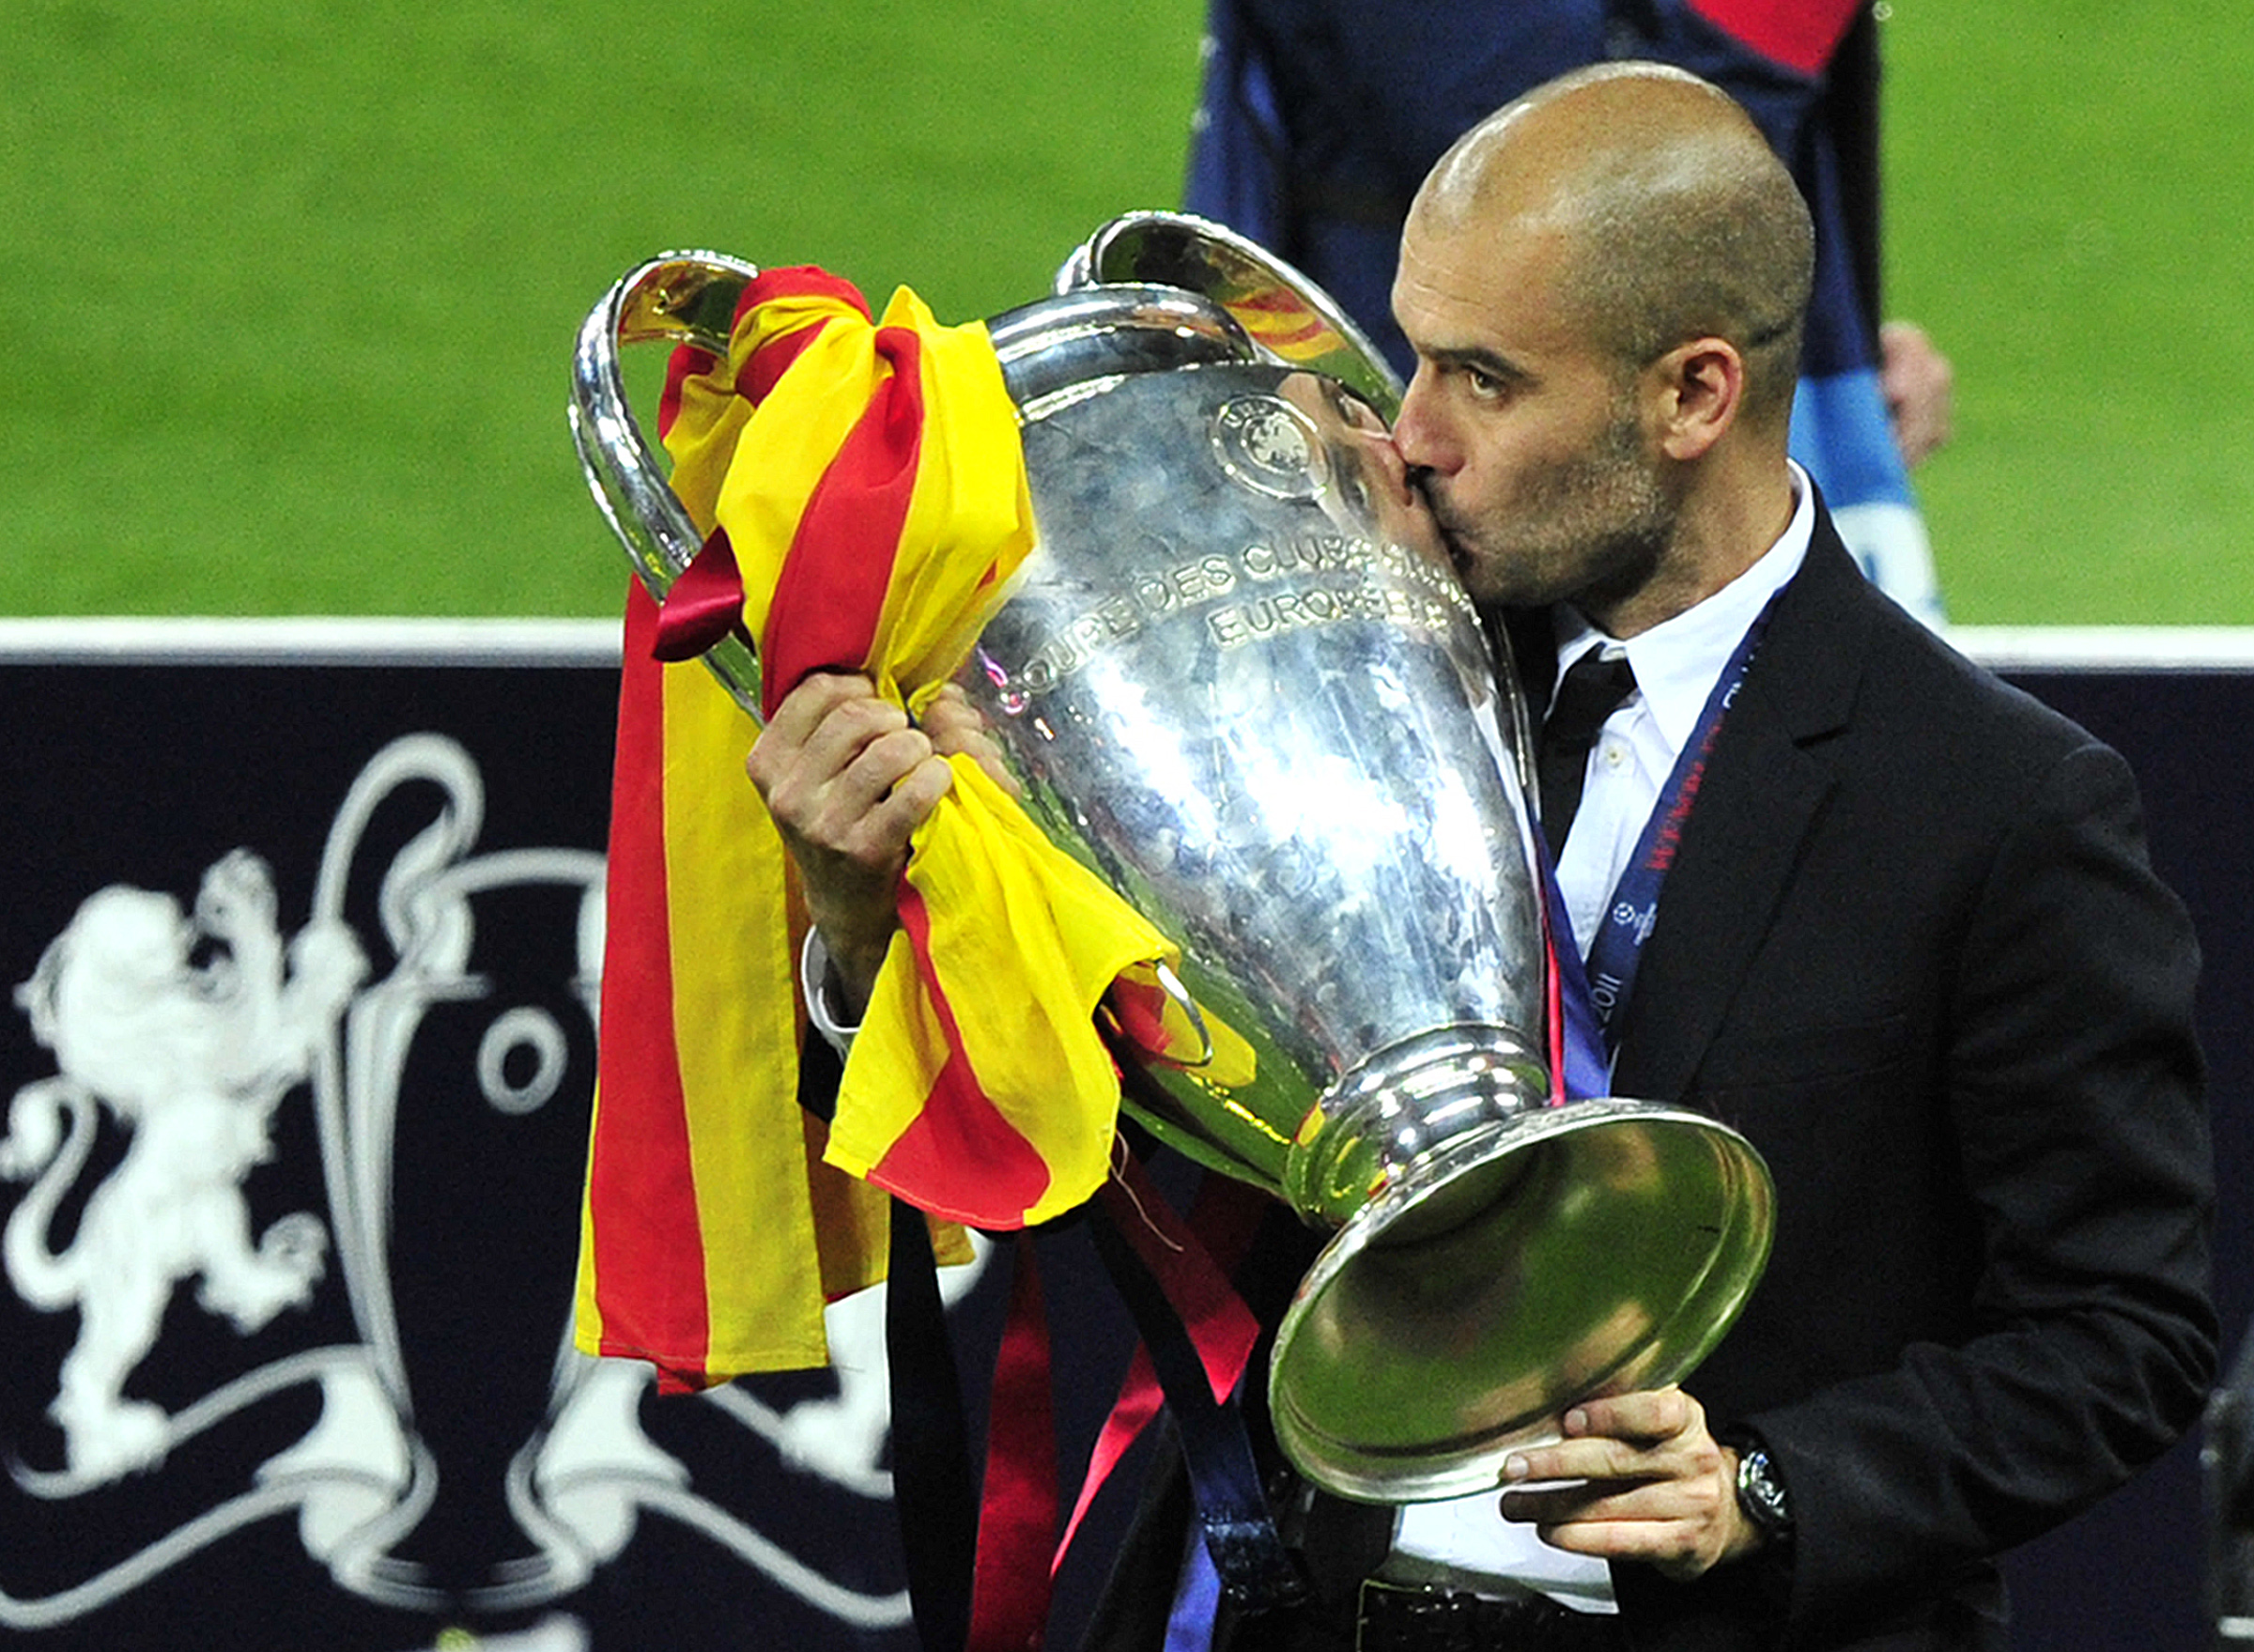 El técnico español del Barcelona, Josep Guardiola, besa el trofeo en la final de la final de la UEFA Champions League FC Barcelona vs.Manchester United, el 28 de mayo de 2011 en el estadio de Wembley de Londres.